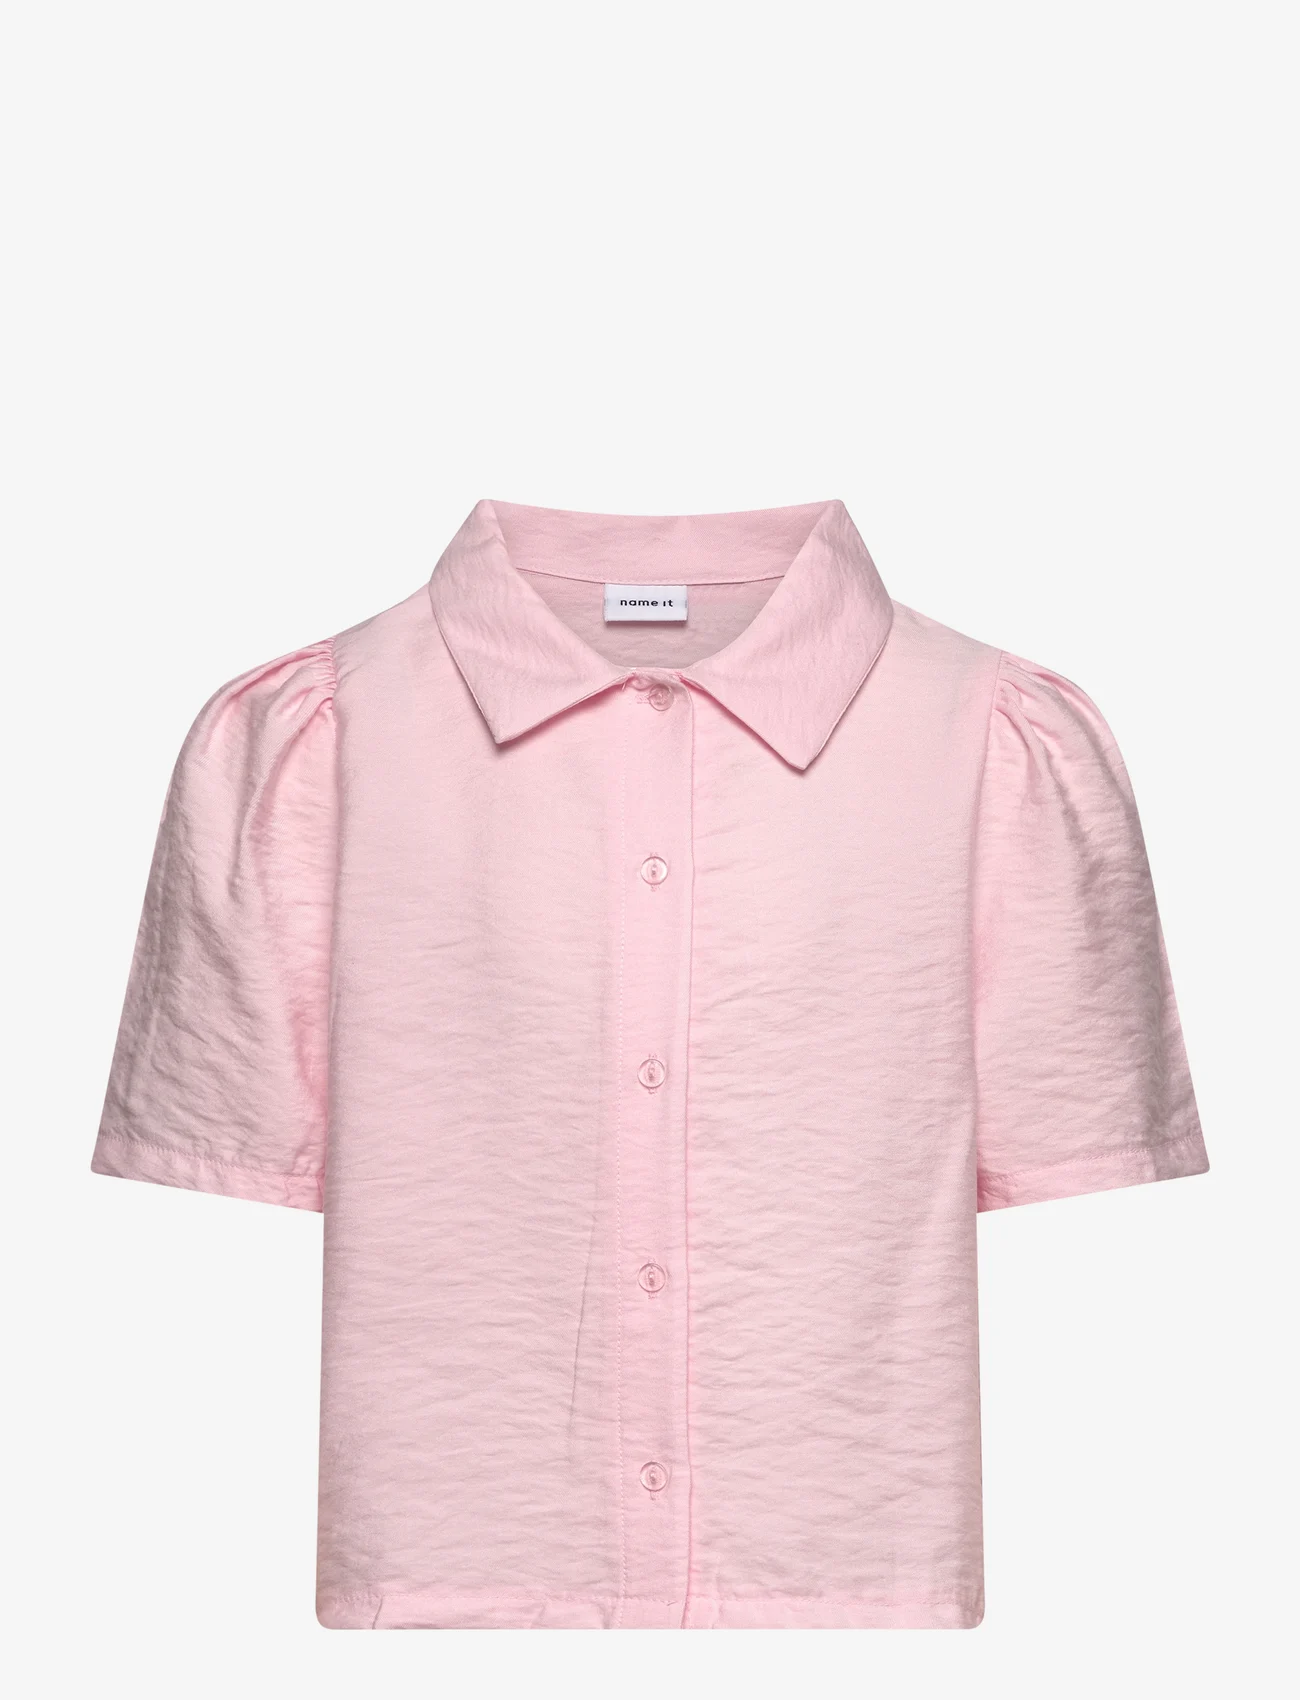 name it - NKFDUANJA SS SHIRT - kurzärmlige hemden - parfait pink - 0